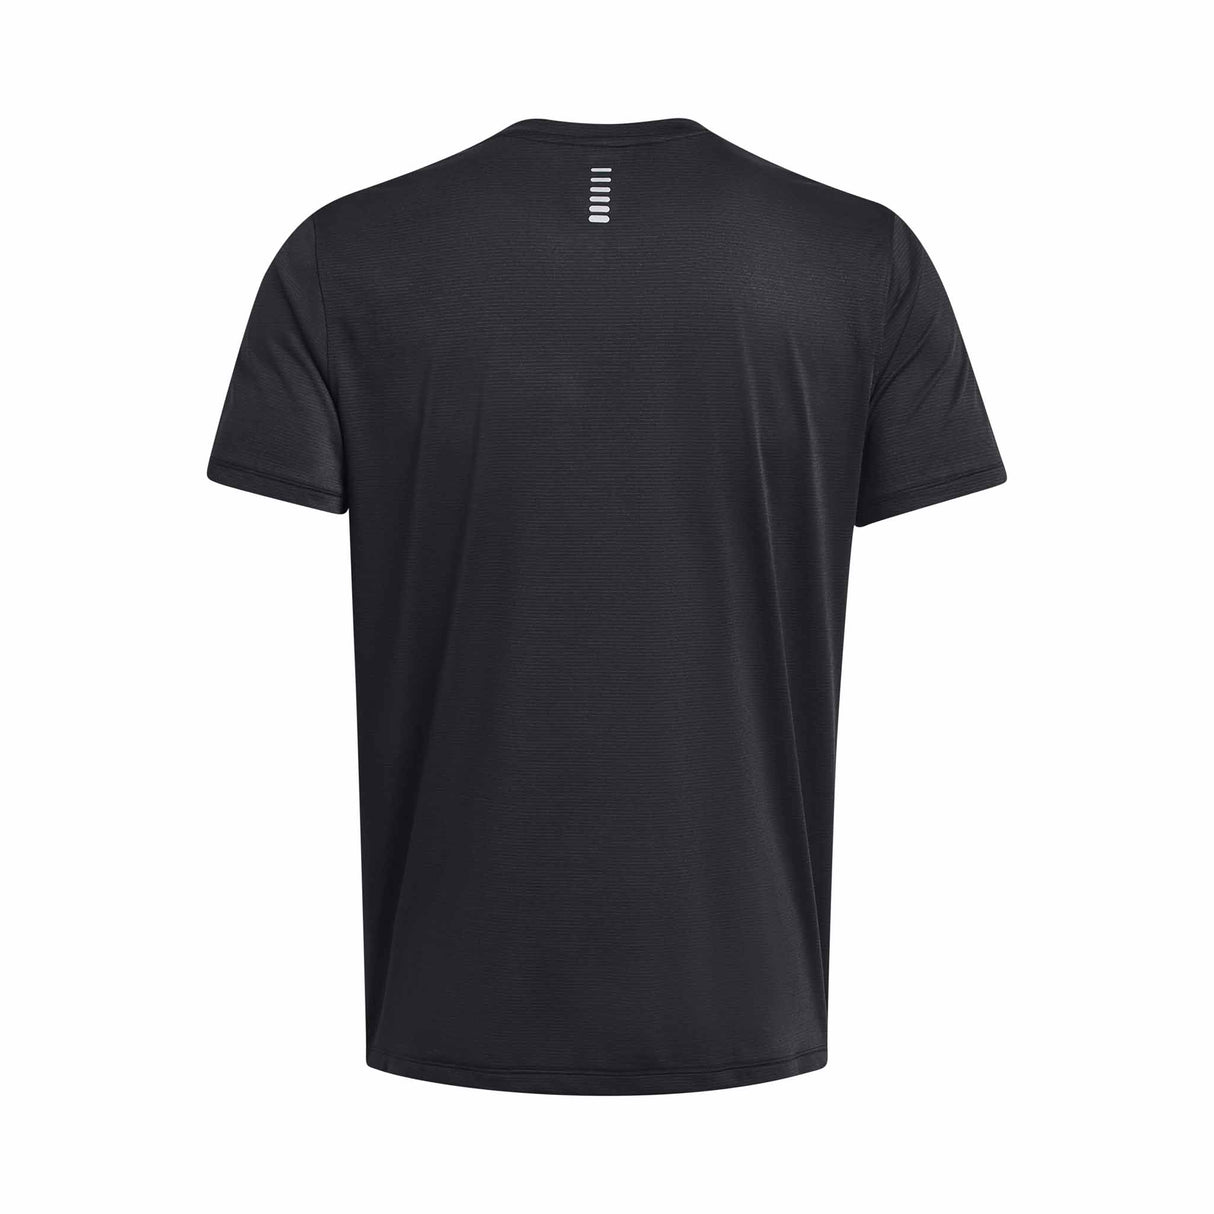 Under Armour Launch t-shirt manches courtes homme dos - black / reflective